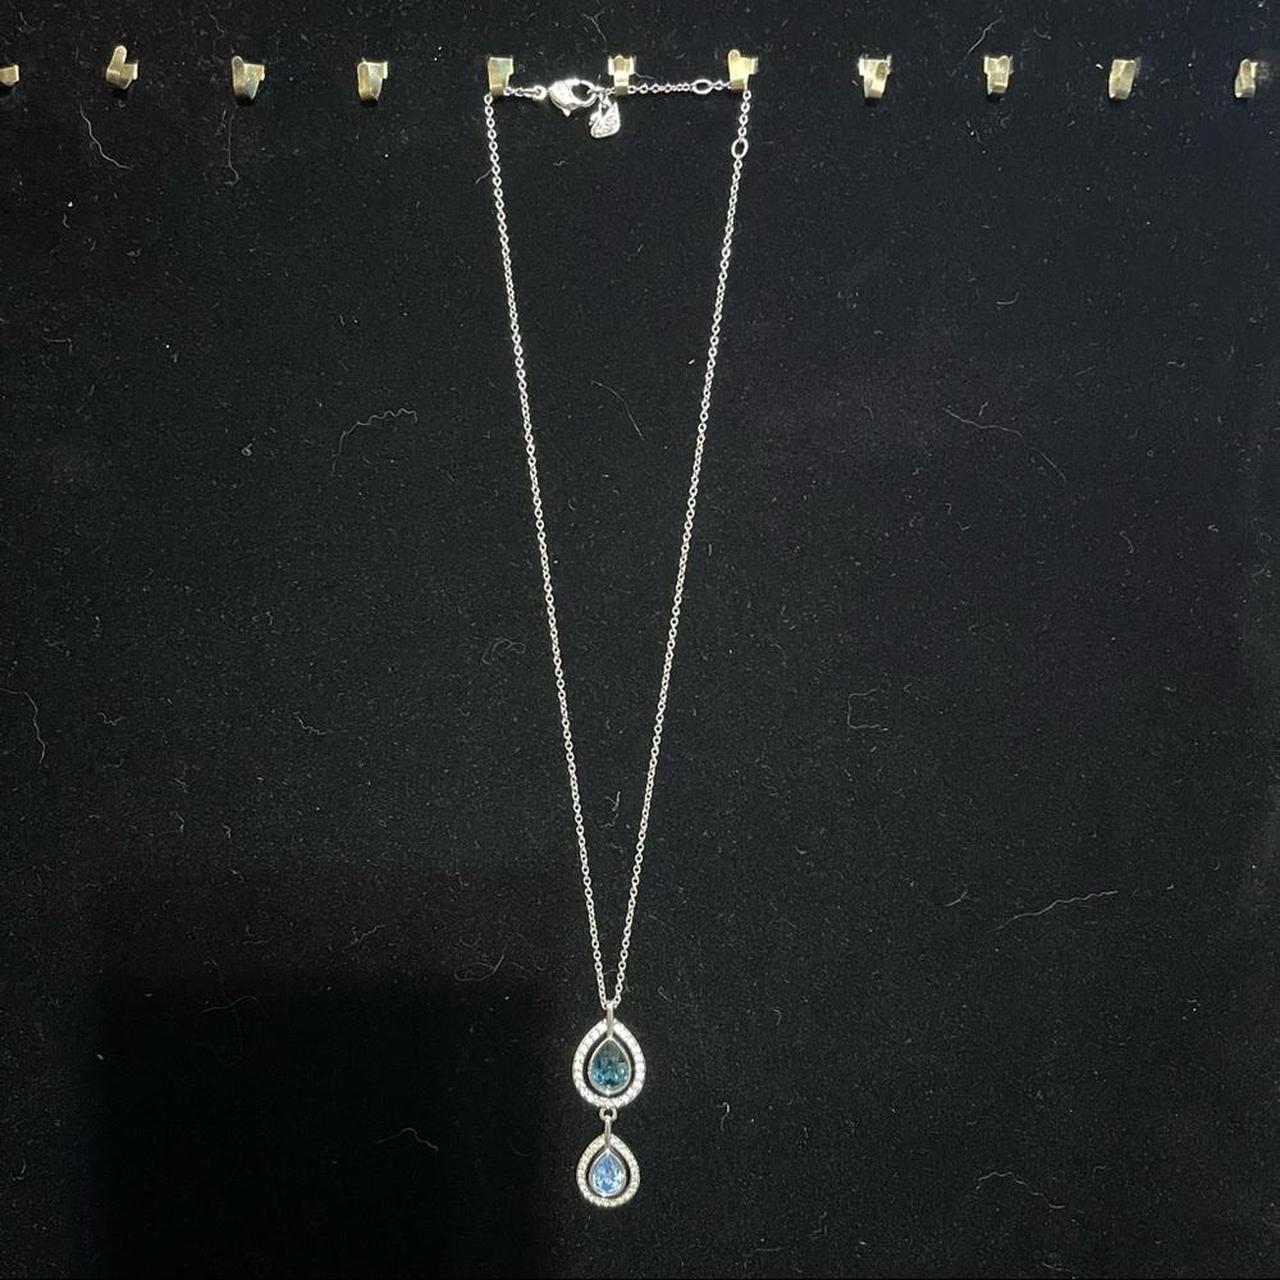 Product Image 2 - Stunning Swarovski Crystal Necklace. 2